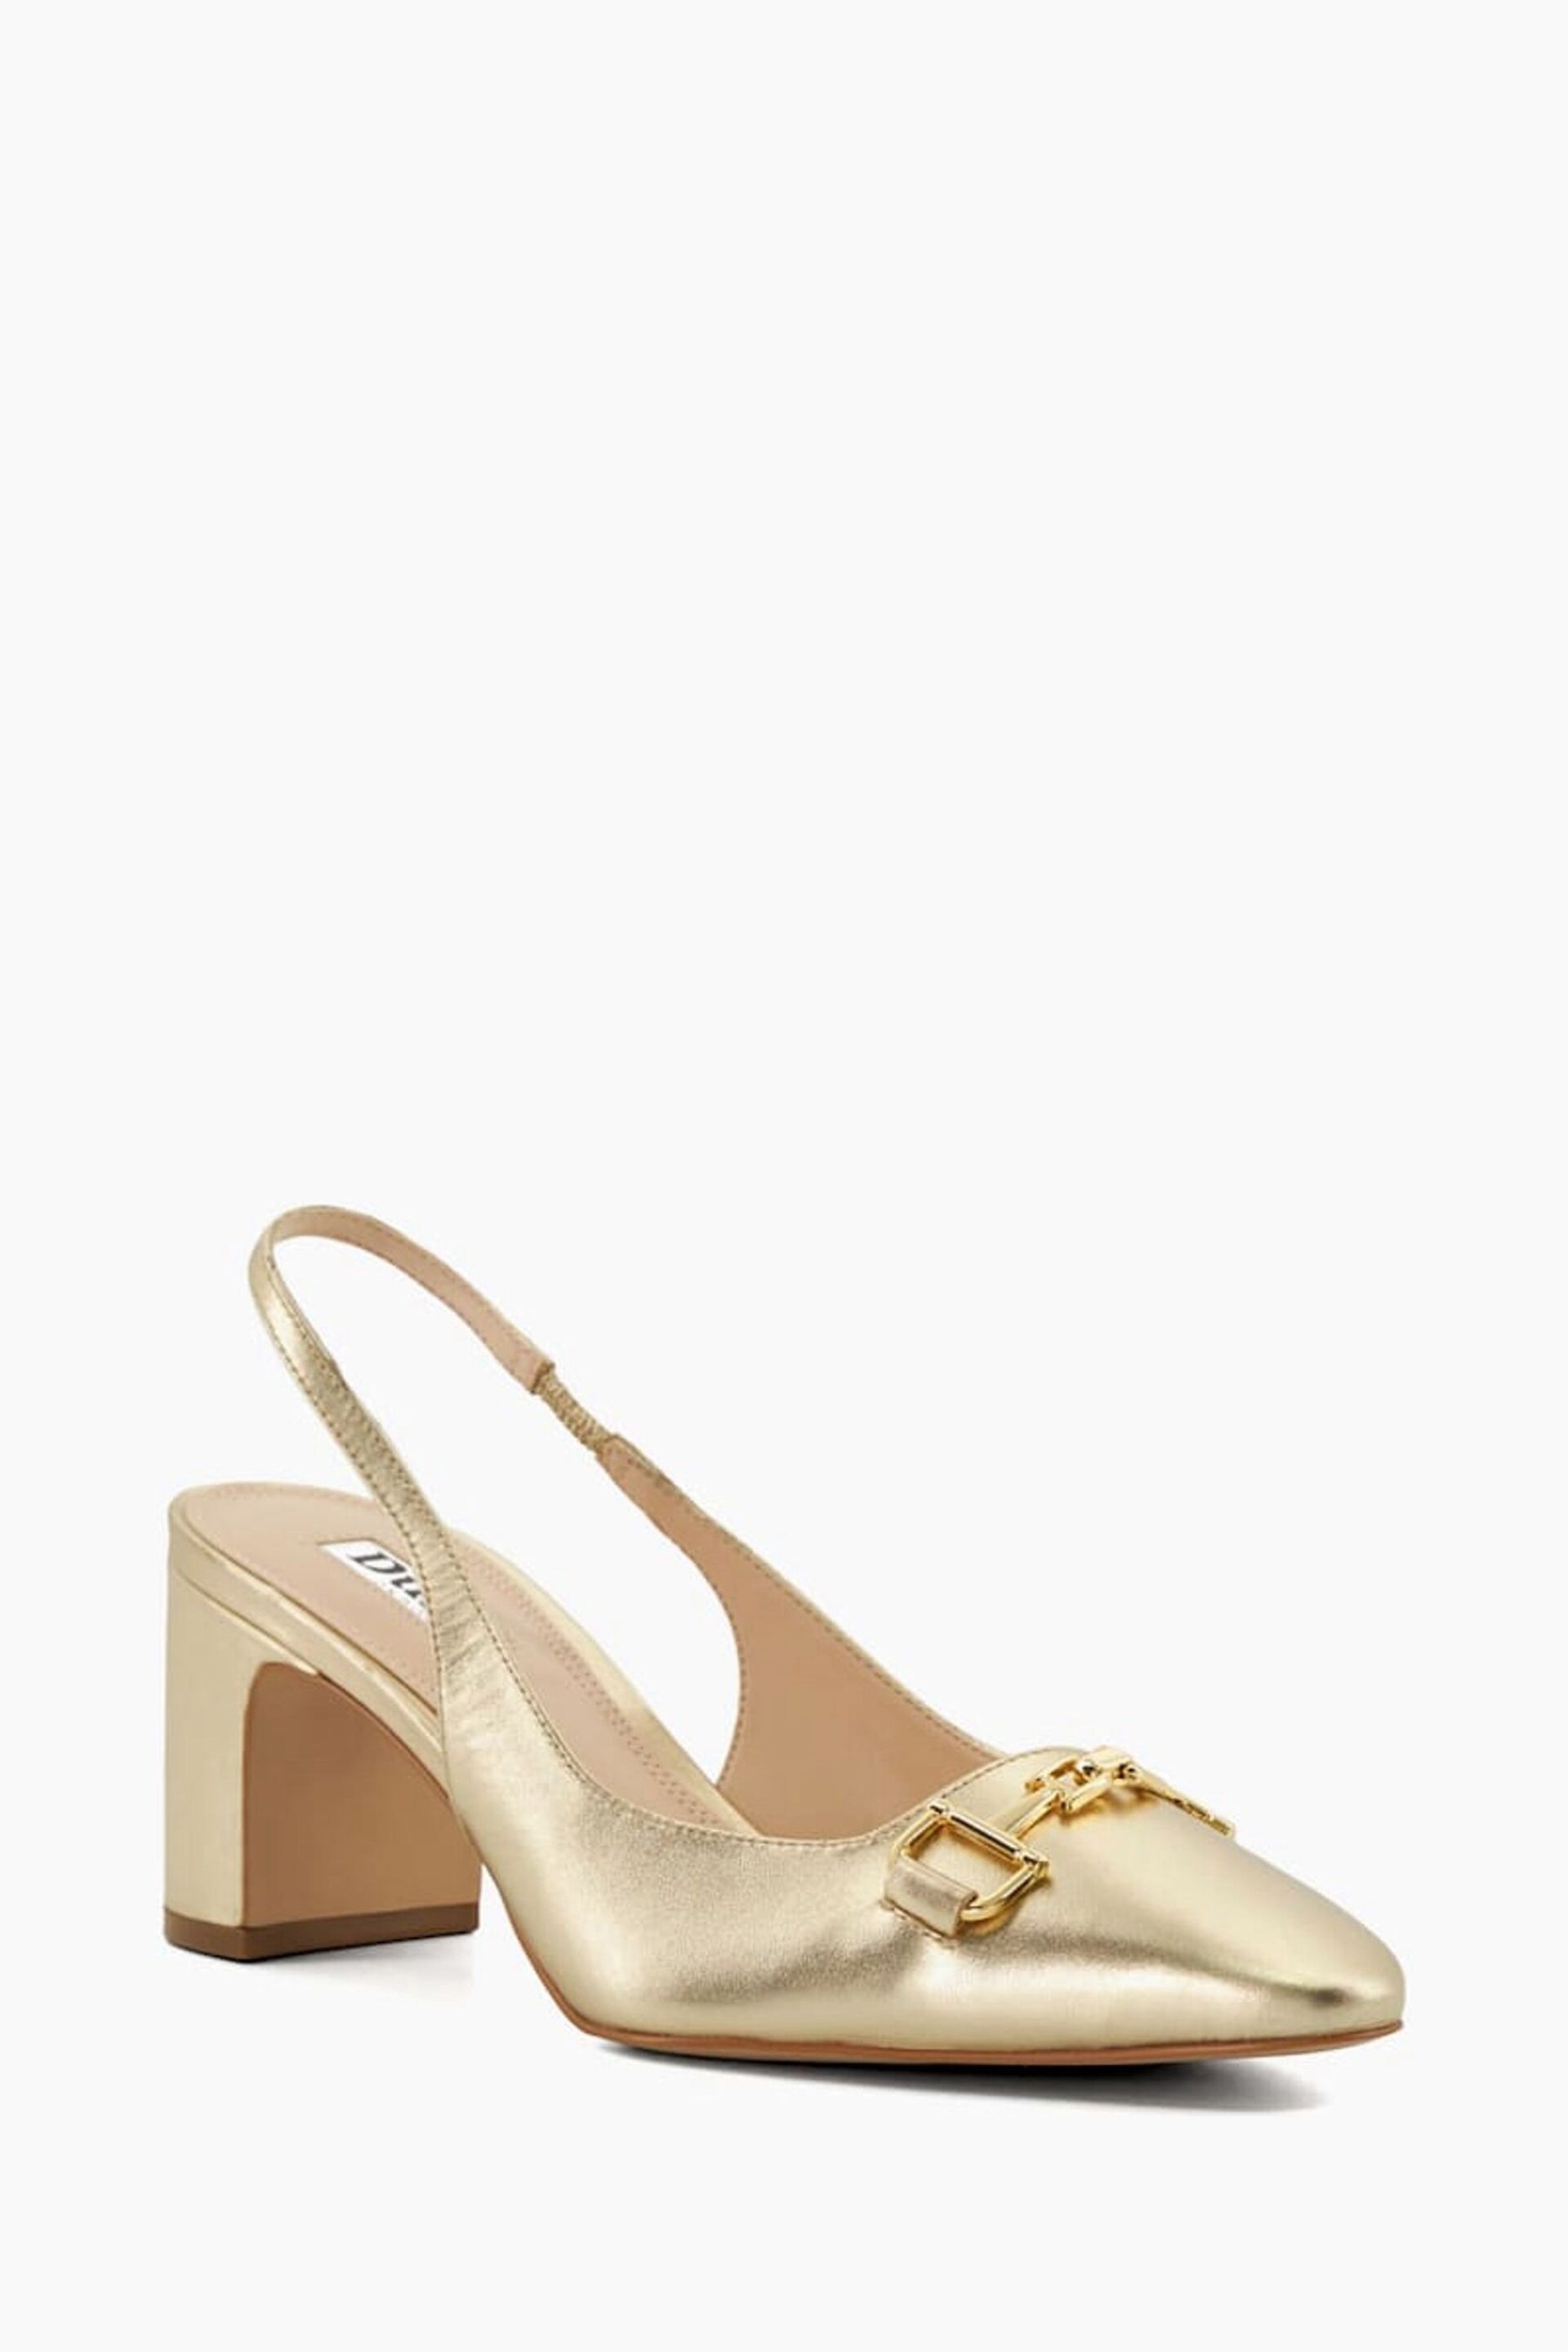 Dune London Gold Detailed Block Heel Snaffle Slingback Shoes - Image 2 of 4